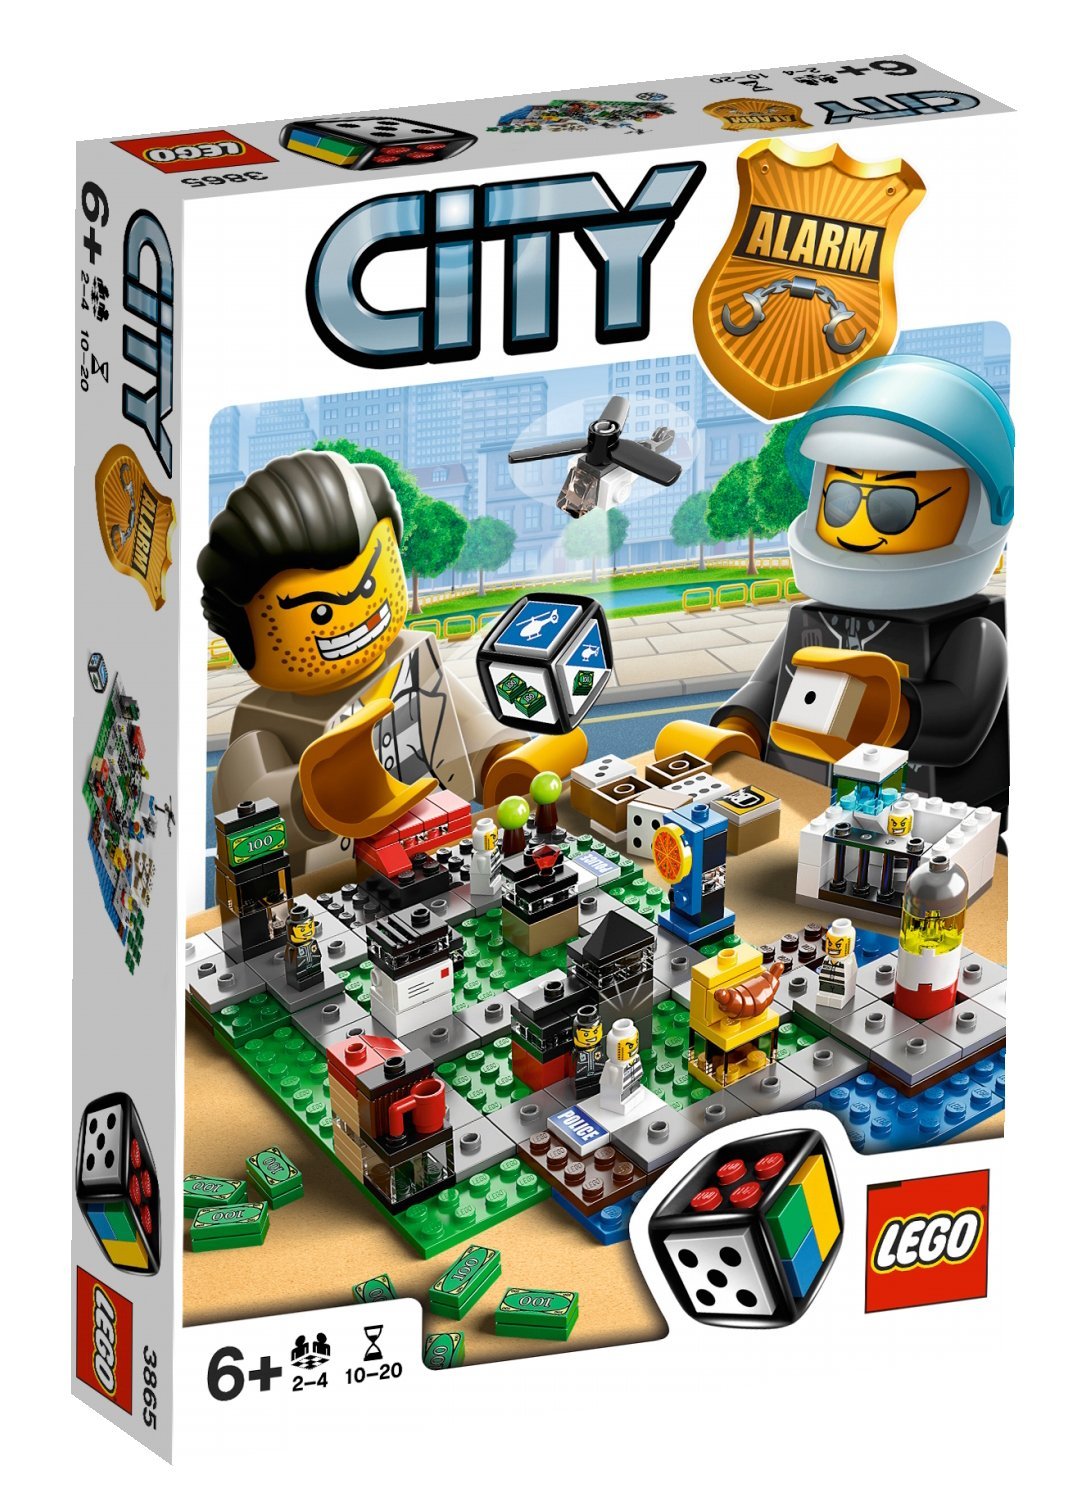 LEGO City Alarm